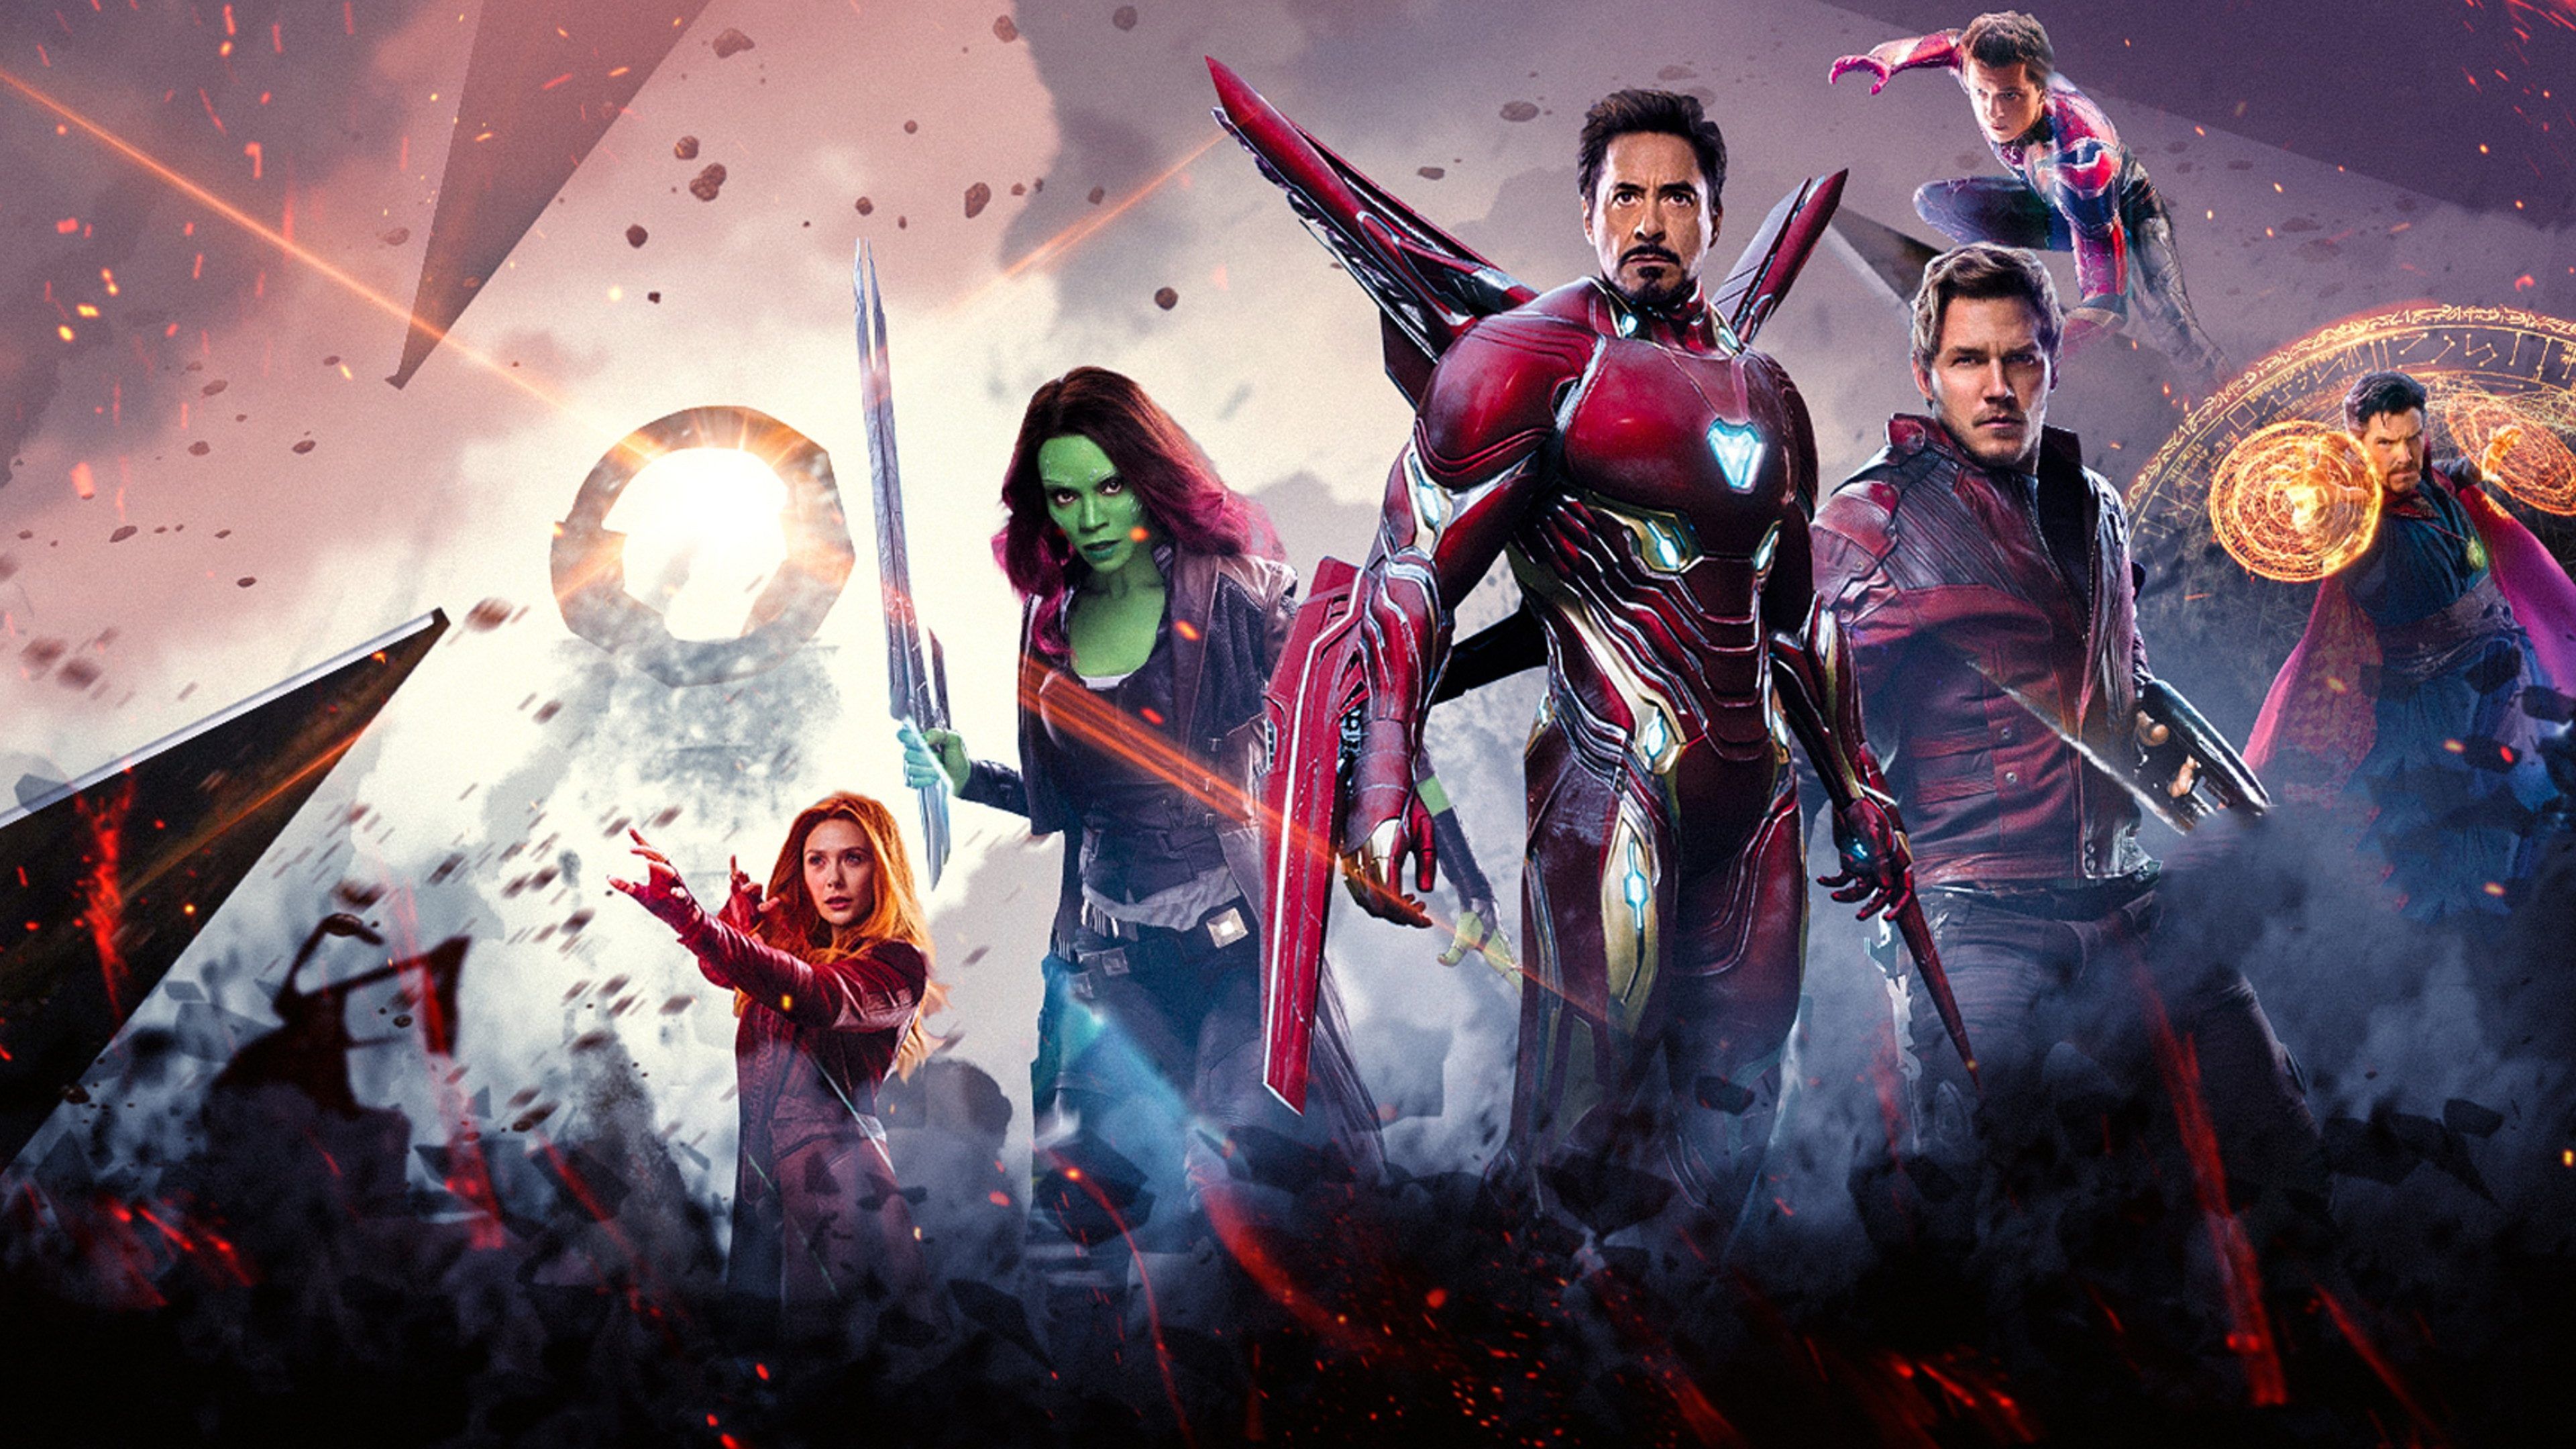 Super Heroes in Avengers Infinity War 4K Wallpaper. Ver peliculas online, Peliculas online, Infinity war